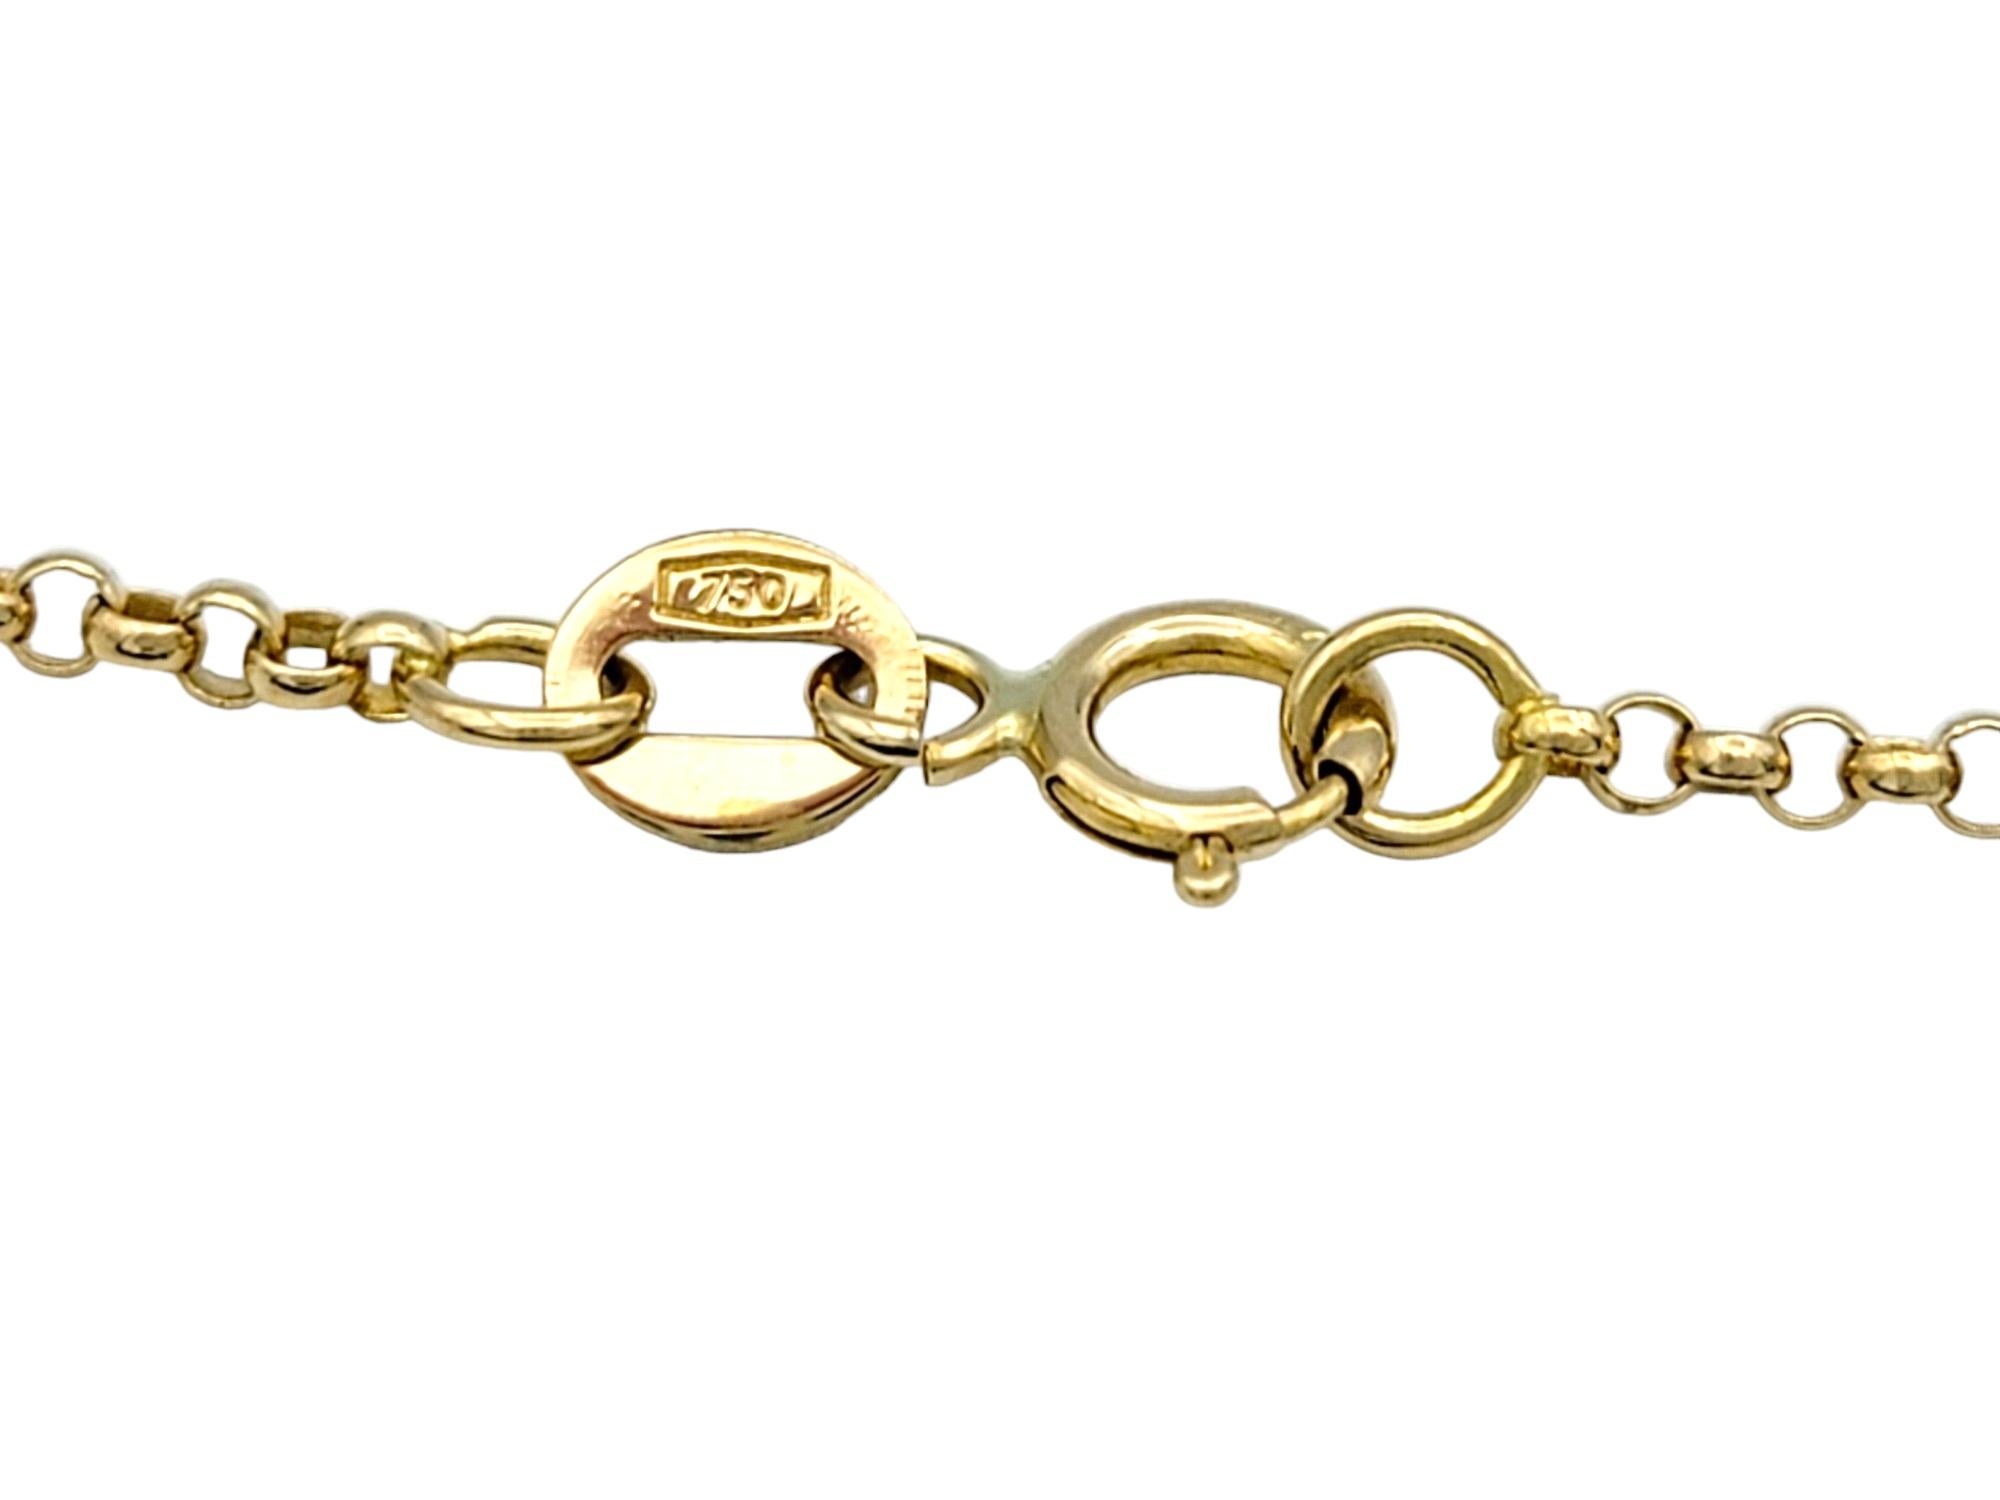 .34 Carat Bezel-Set Round Diamond Solitaire Pendant Necklace in 18 Karat Gold For Sale 2